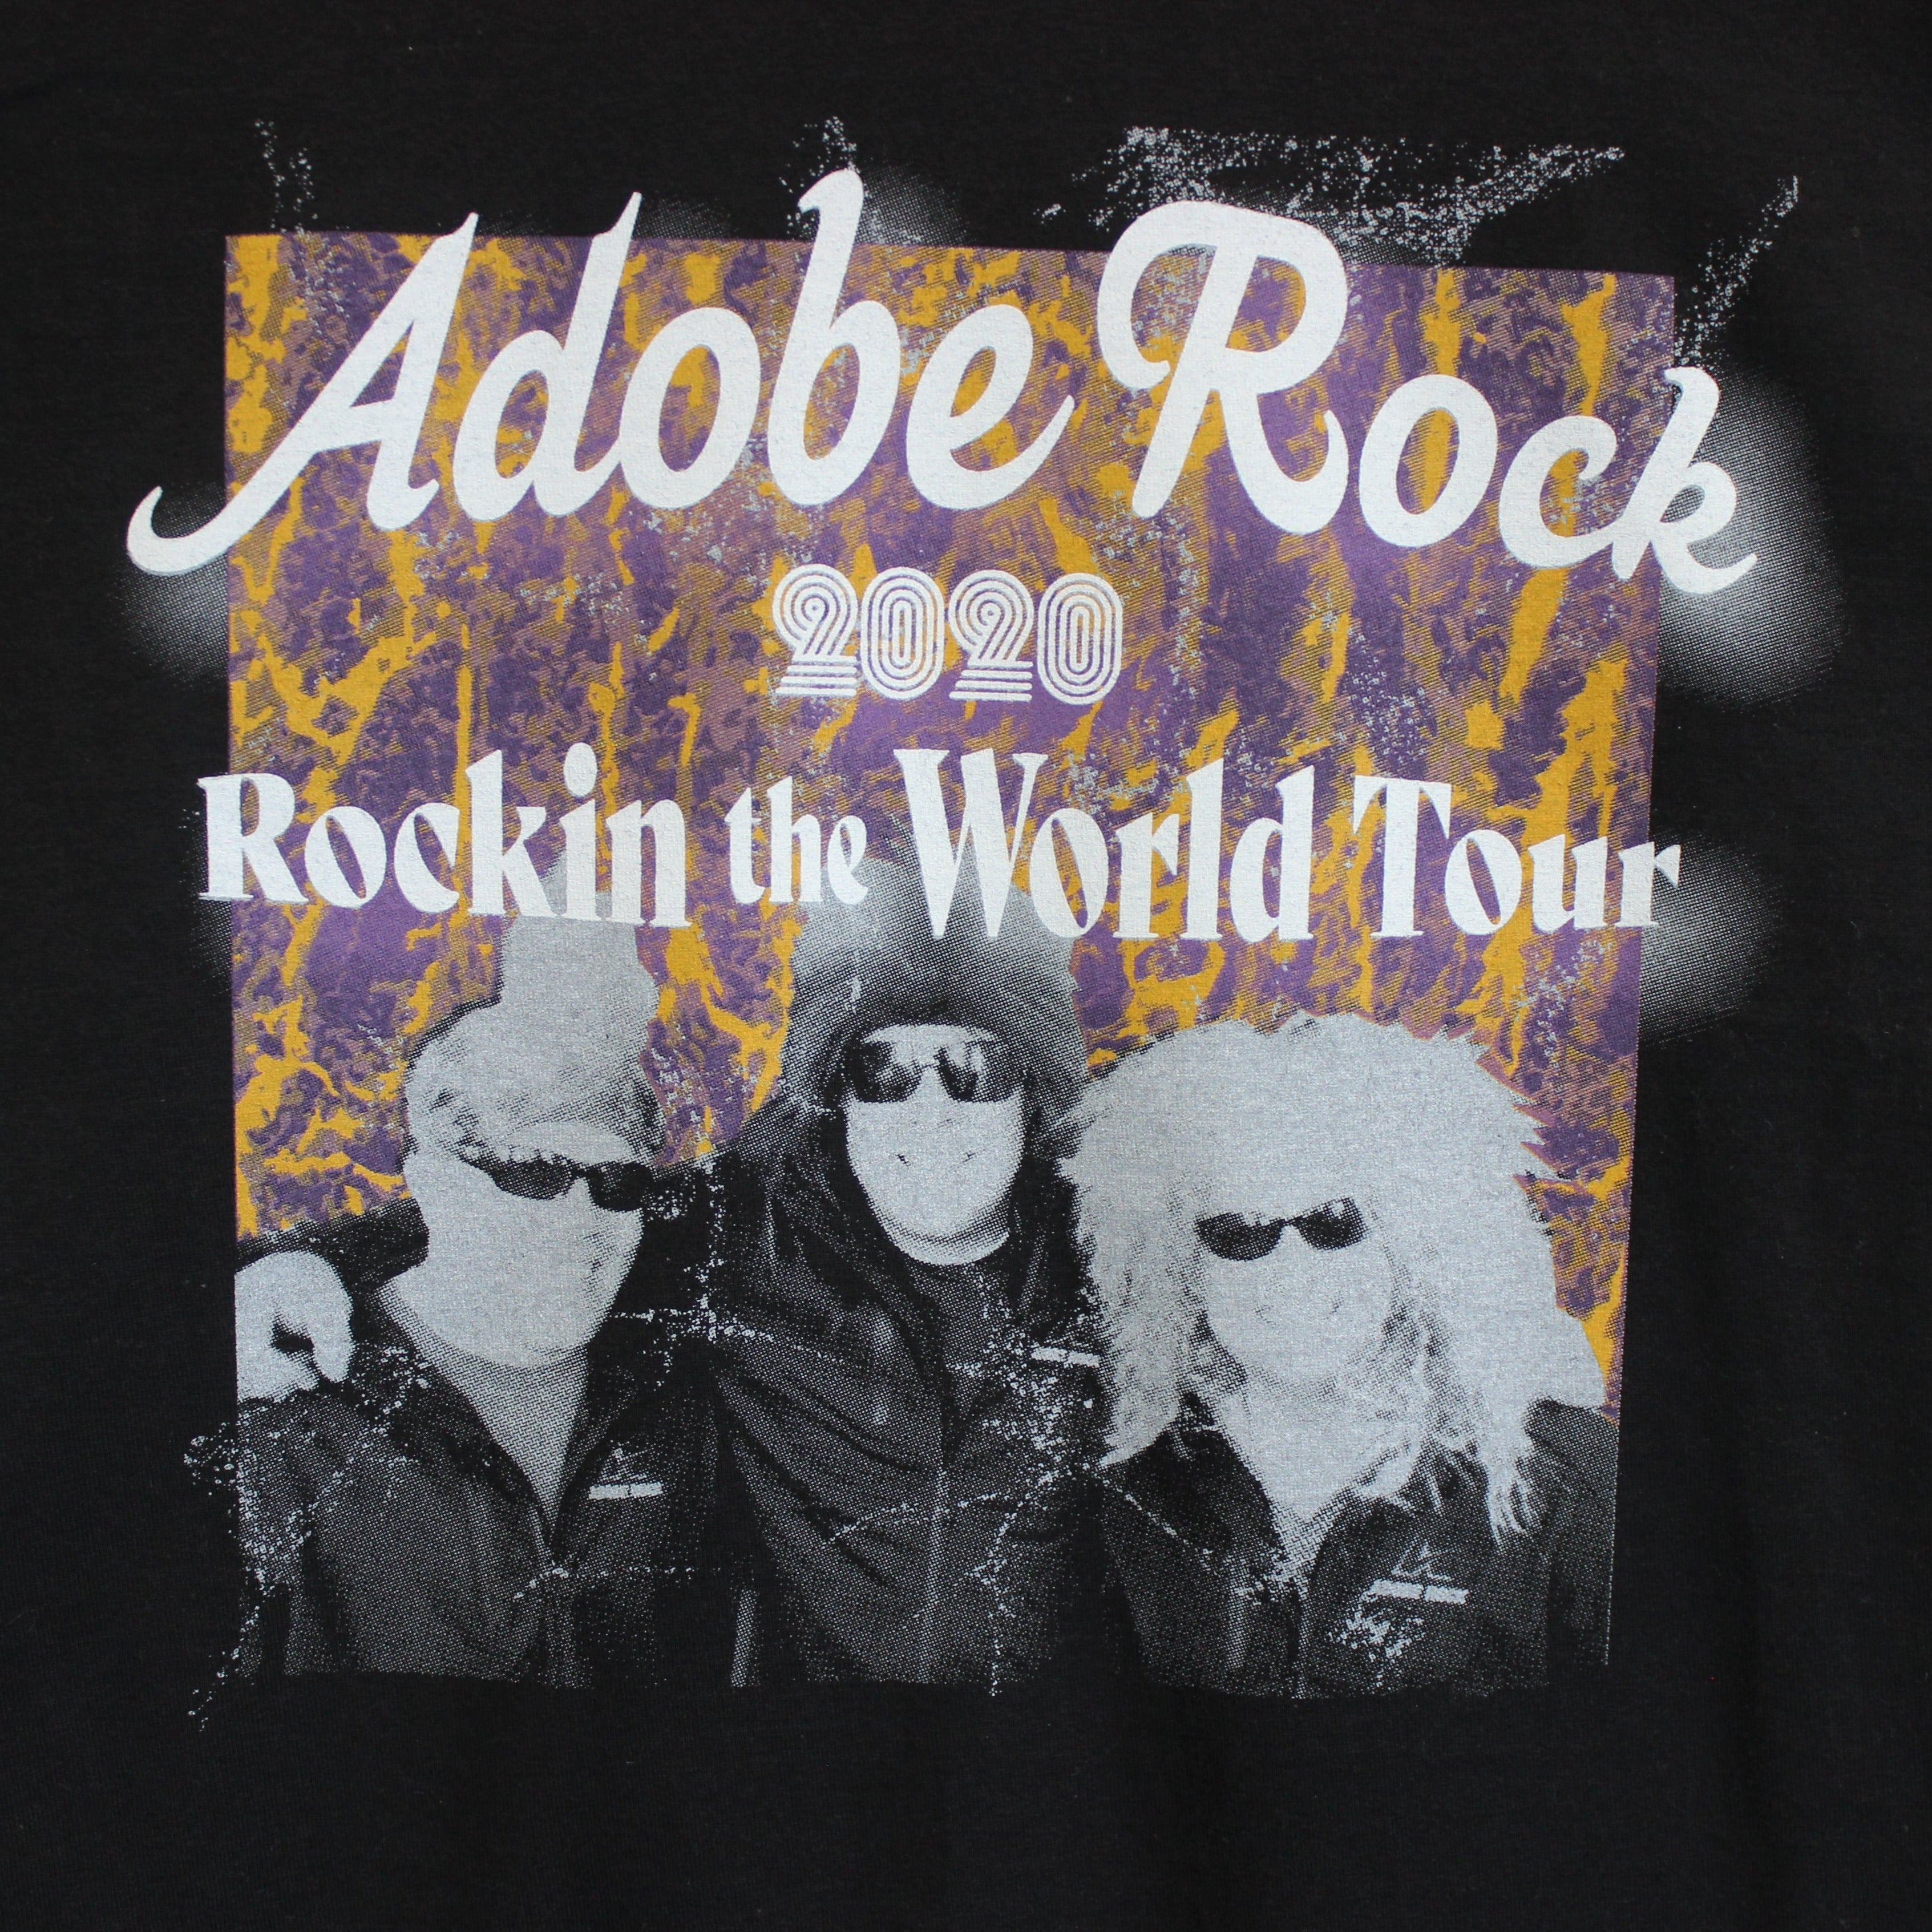 Adobe Rock World Tour T-Shirt